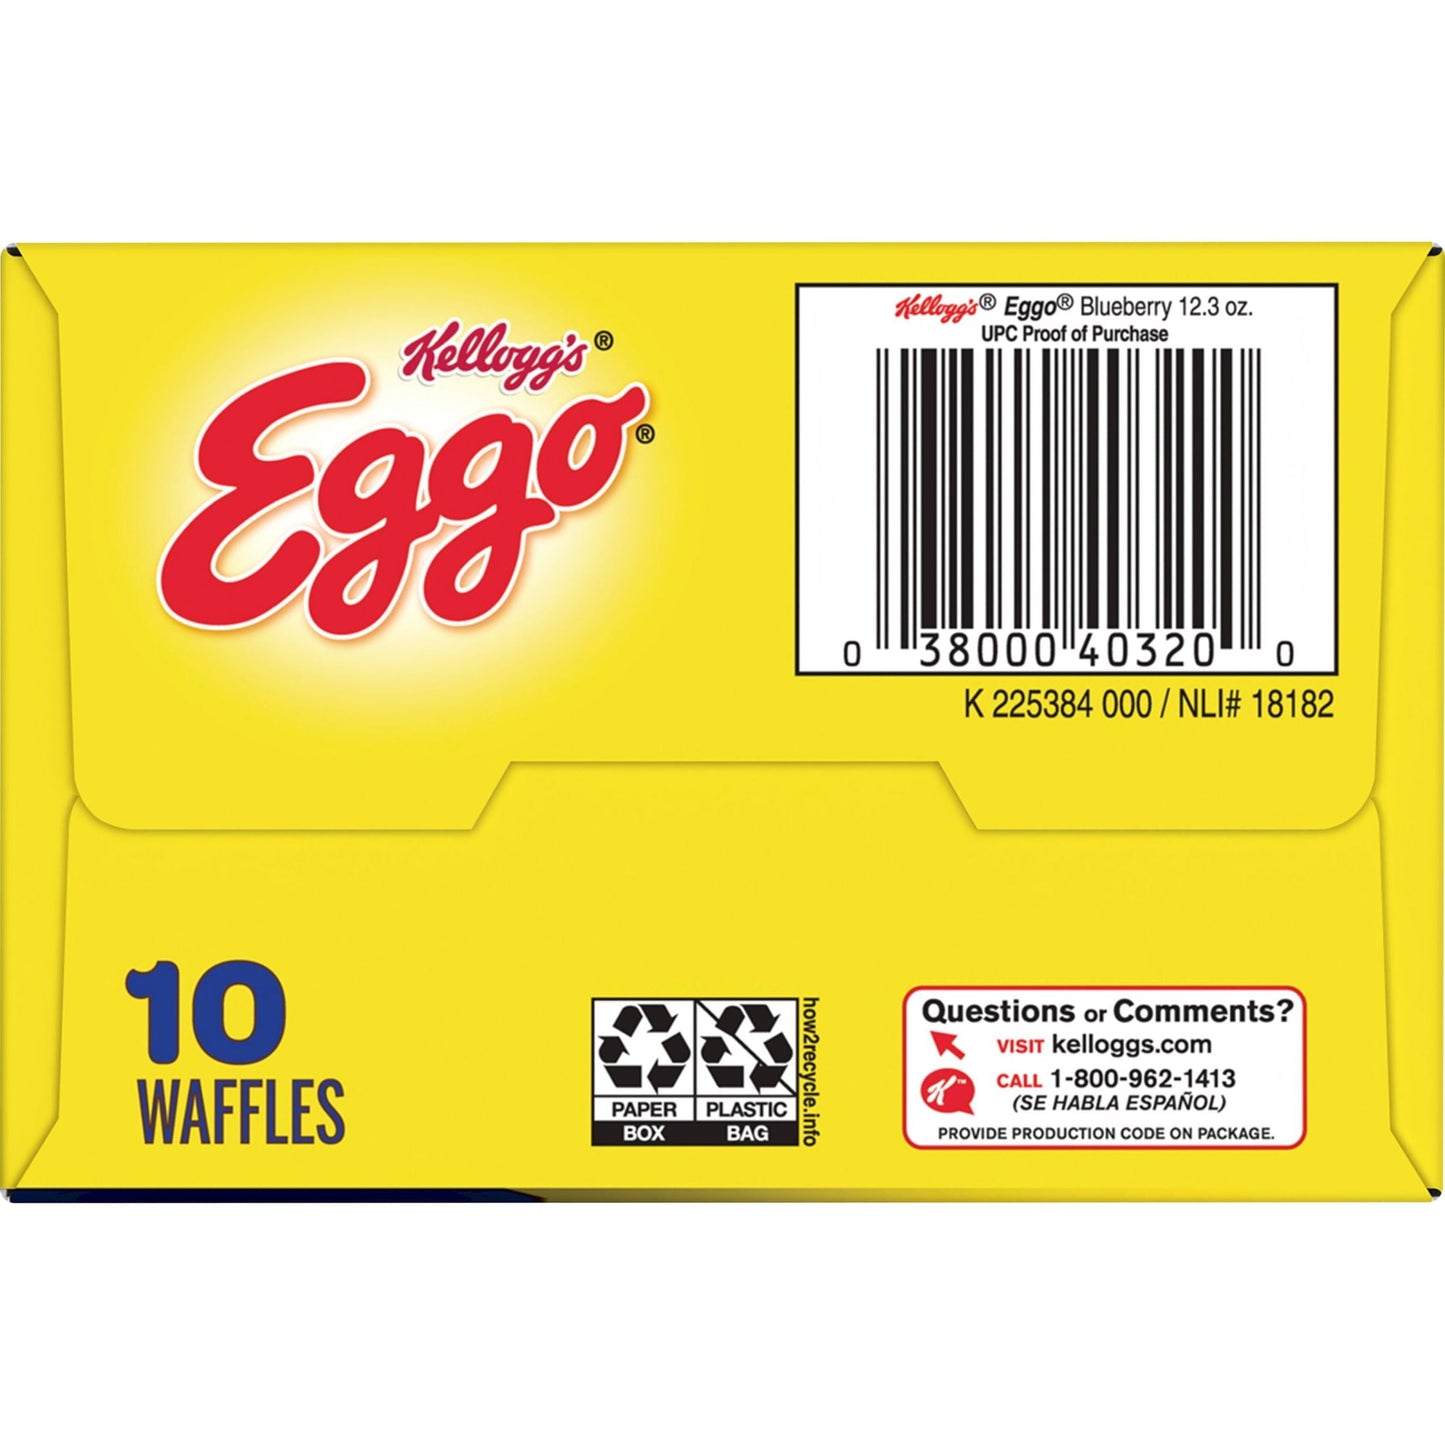 Eggo Blueberry Waffles, 12.3 oz, 10 Count (Frozen)